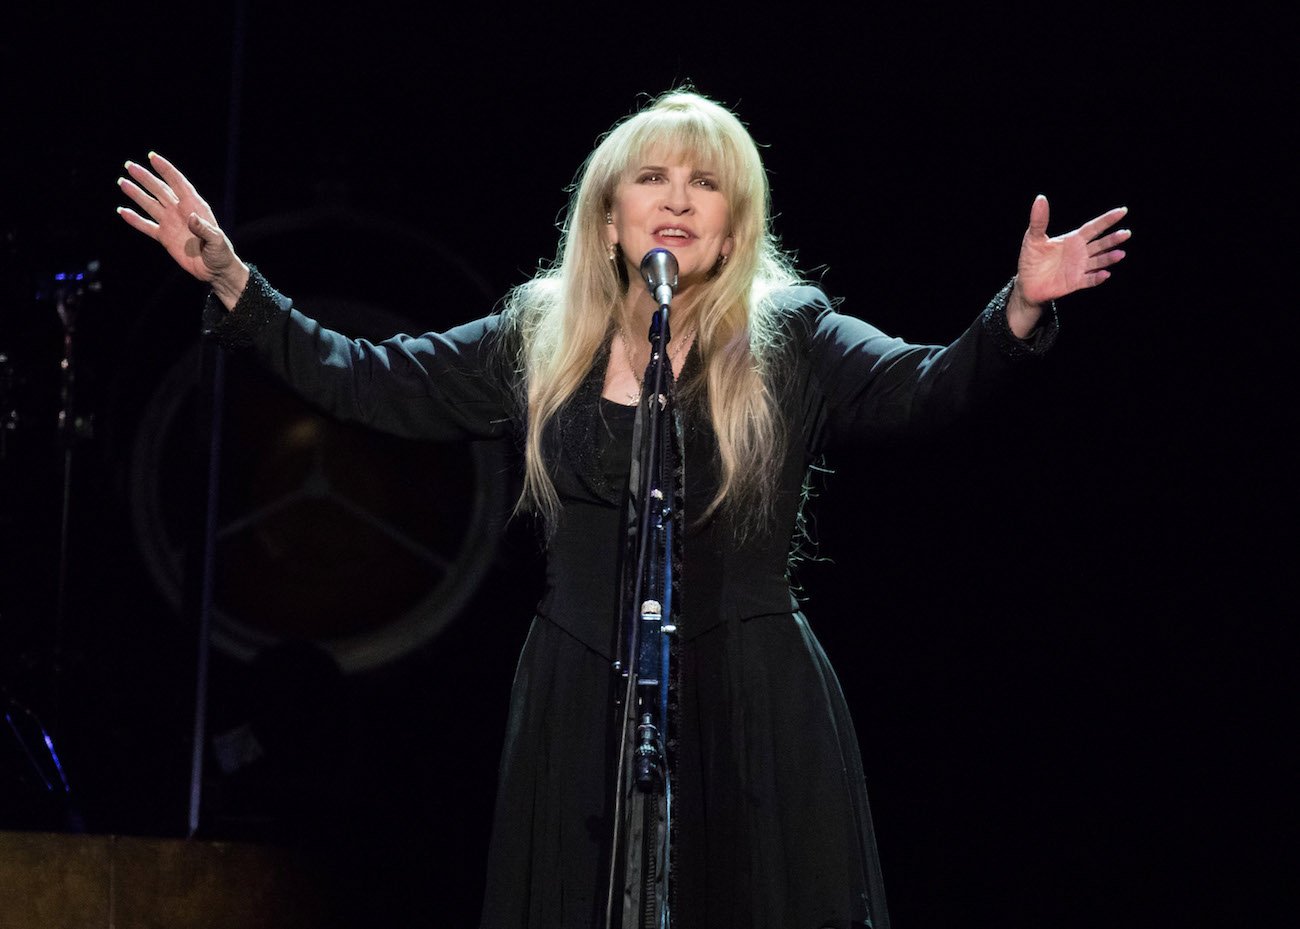 Stevie Nicks wearing black performing on stage in Michigan, 2016.